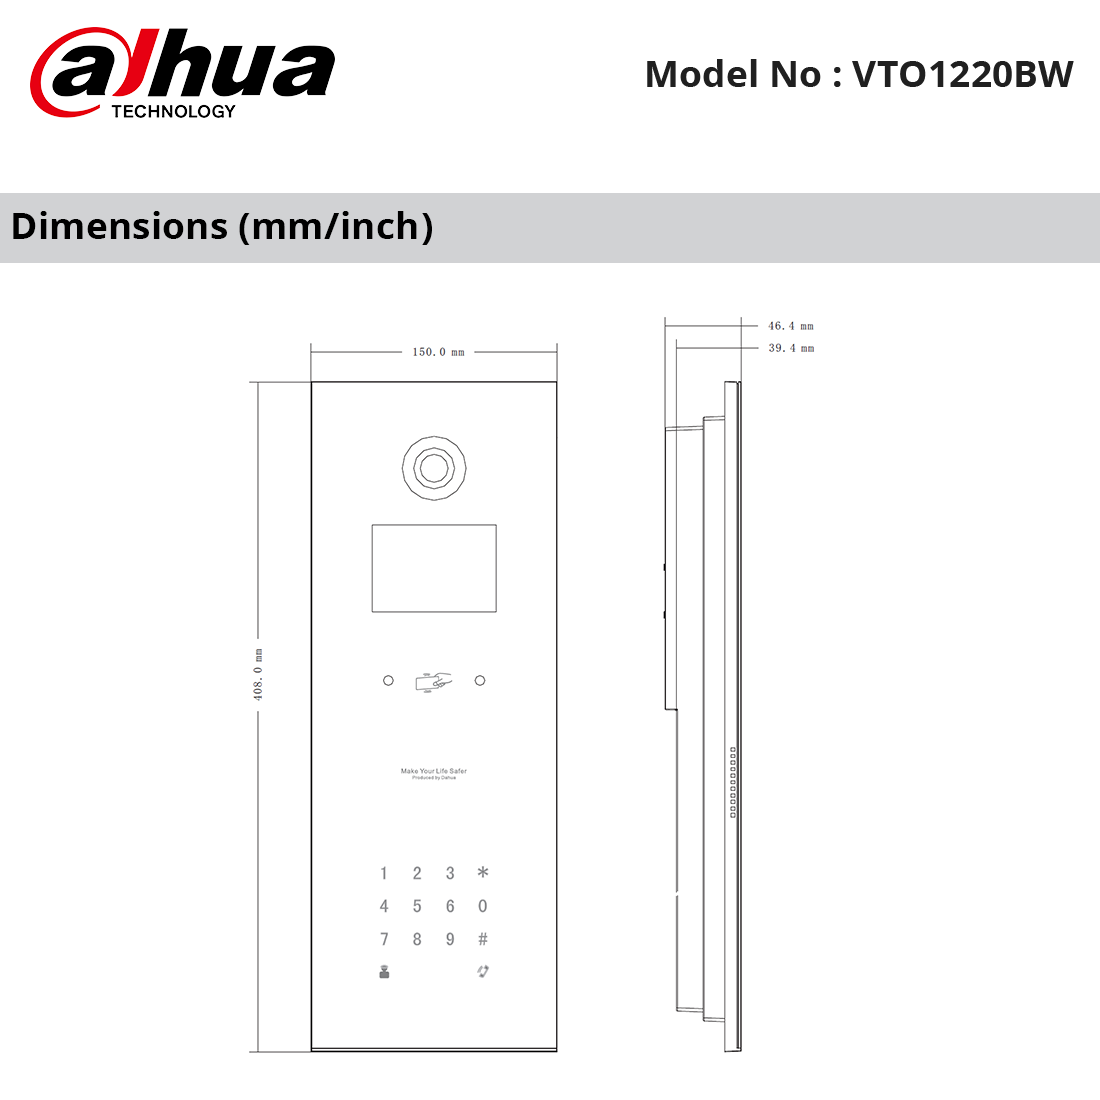 VTO1220BW Dimensions